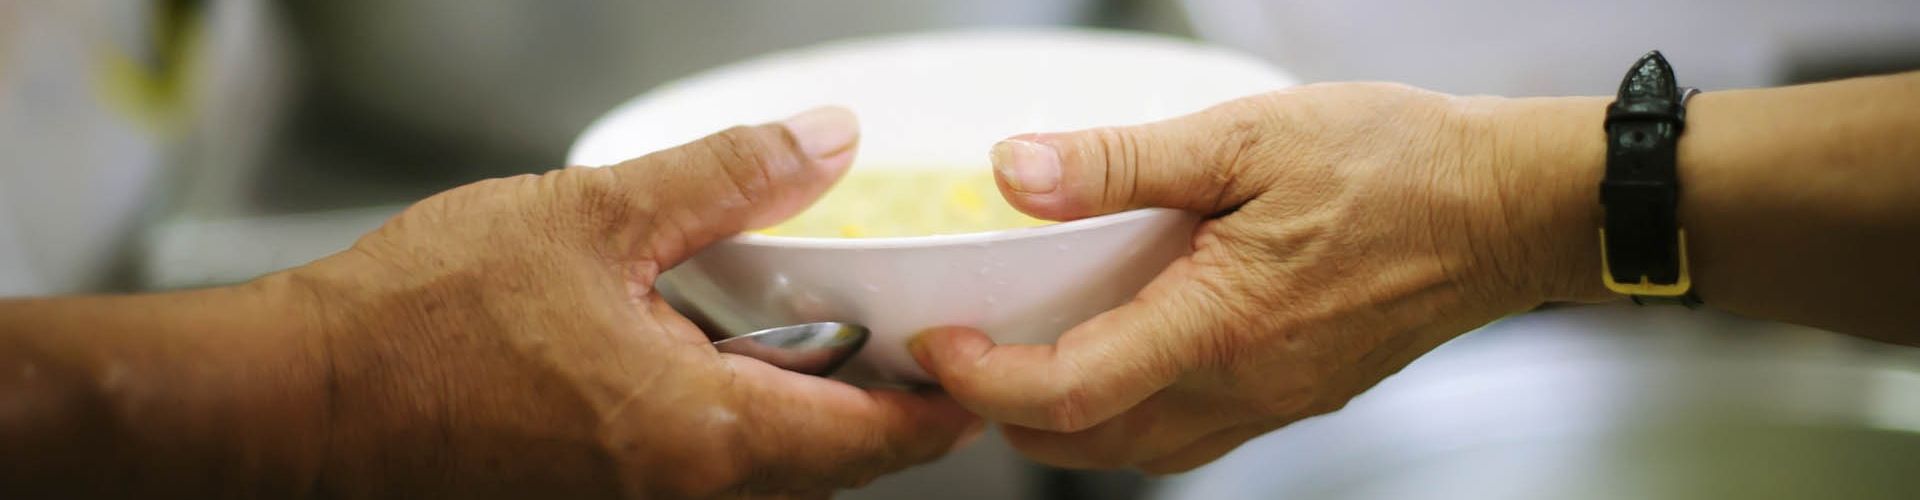 Caritas vaud sdf repas sans abri mains